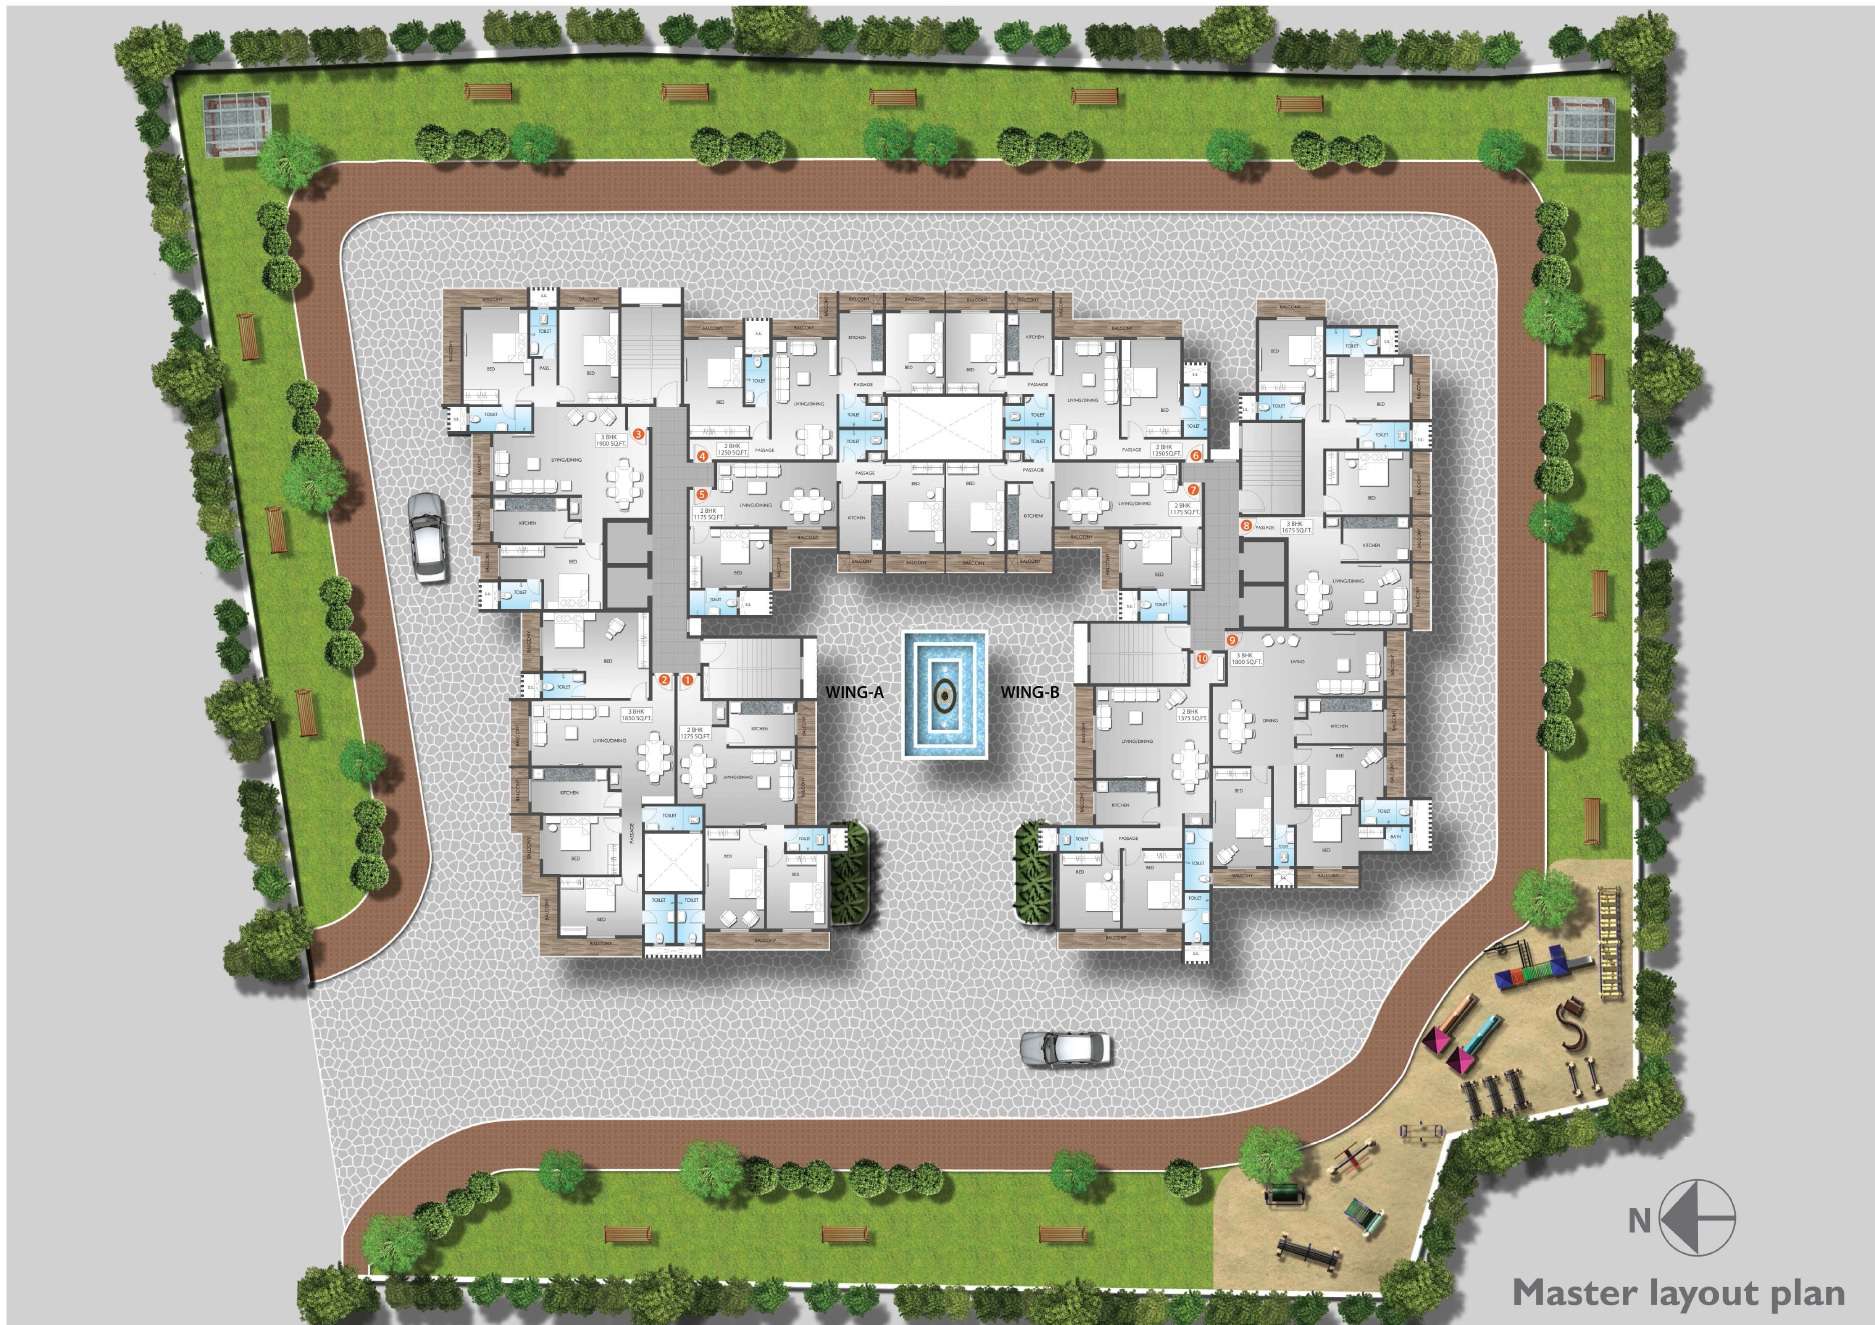 sds raheja residency project master plan image1 2562